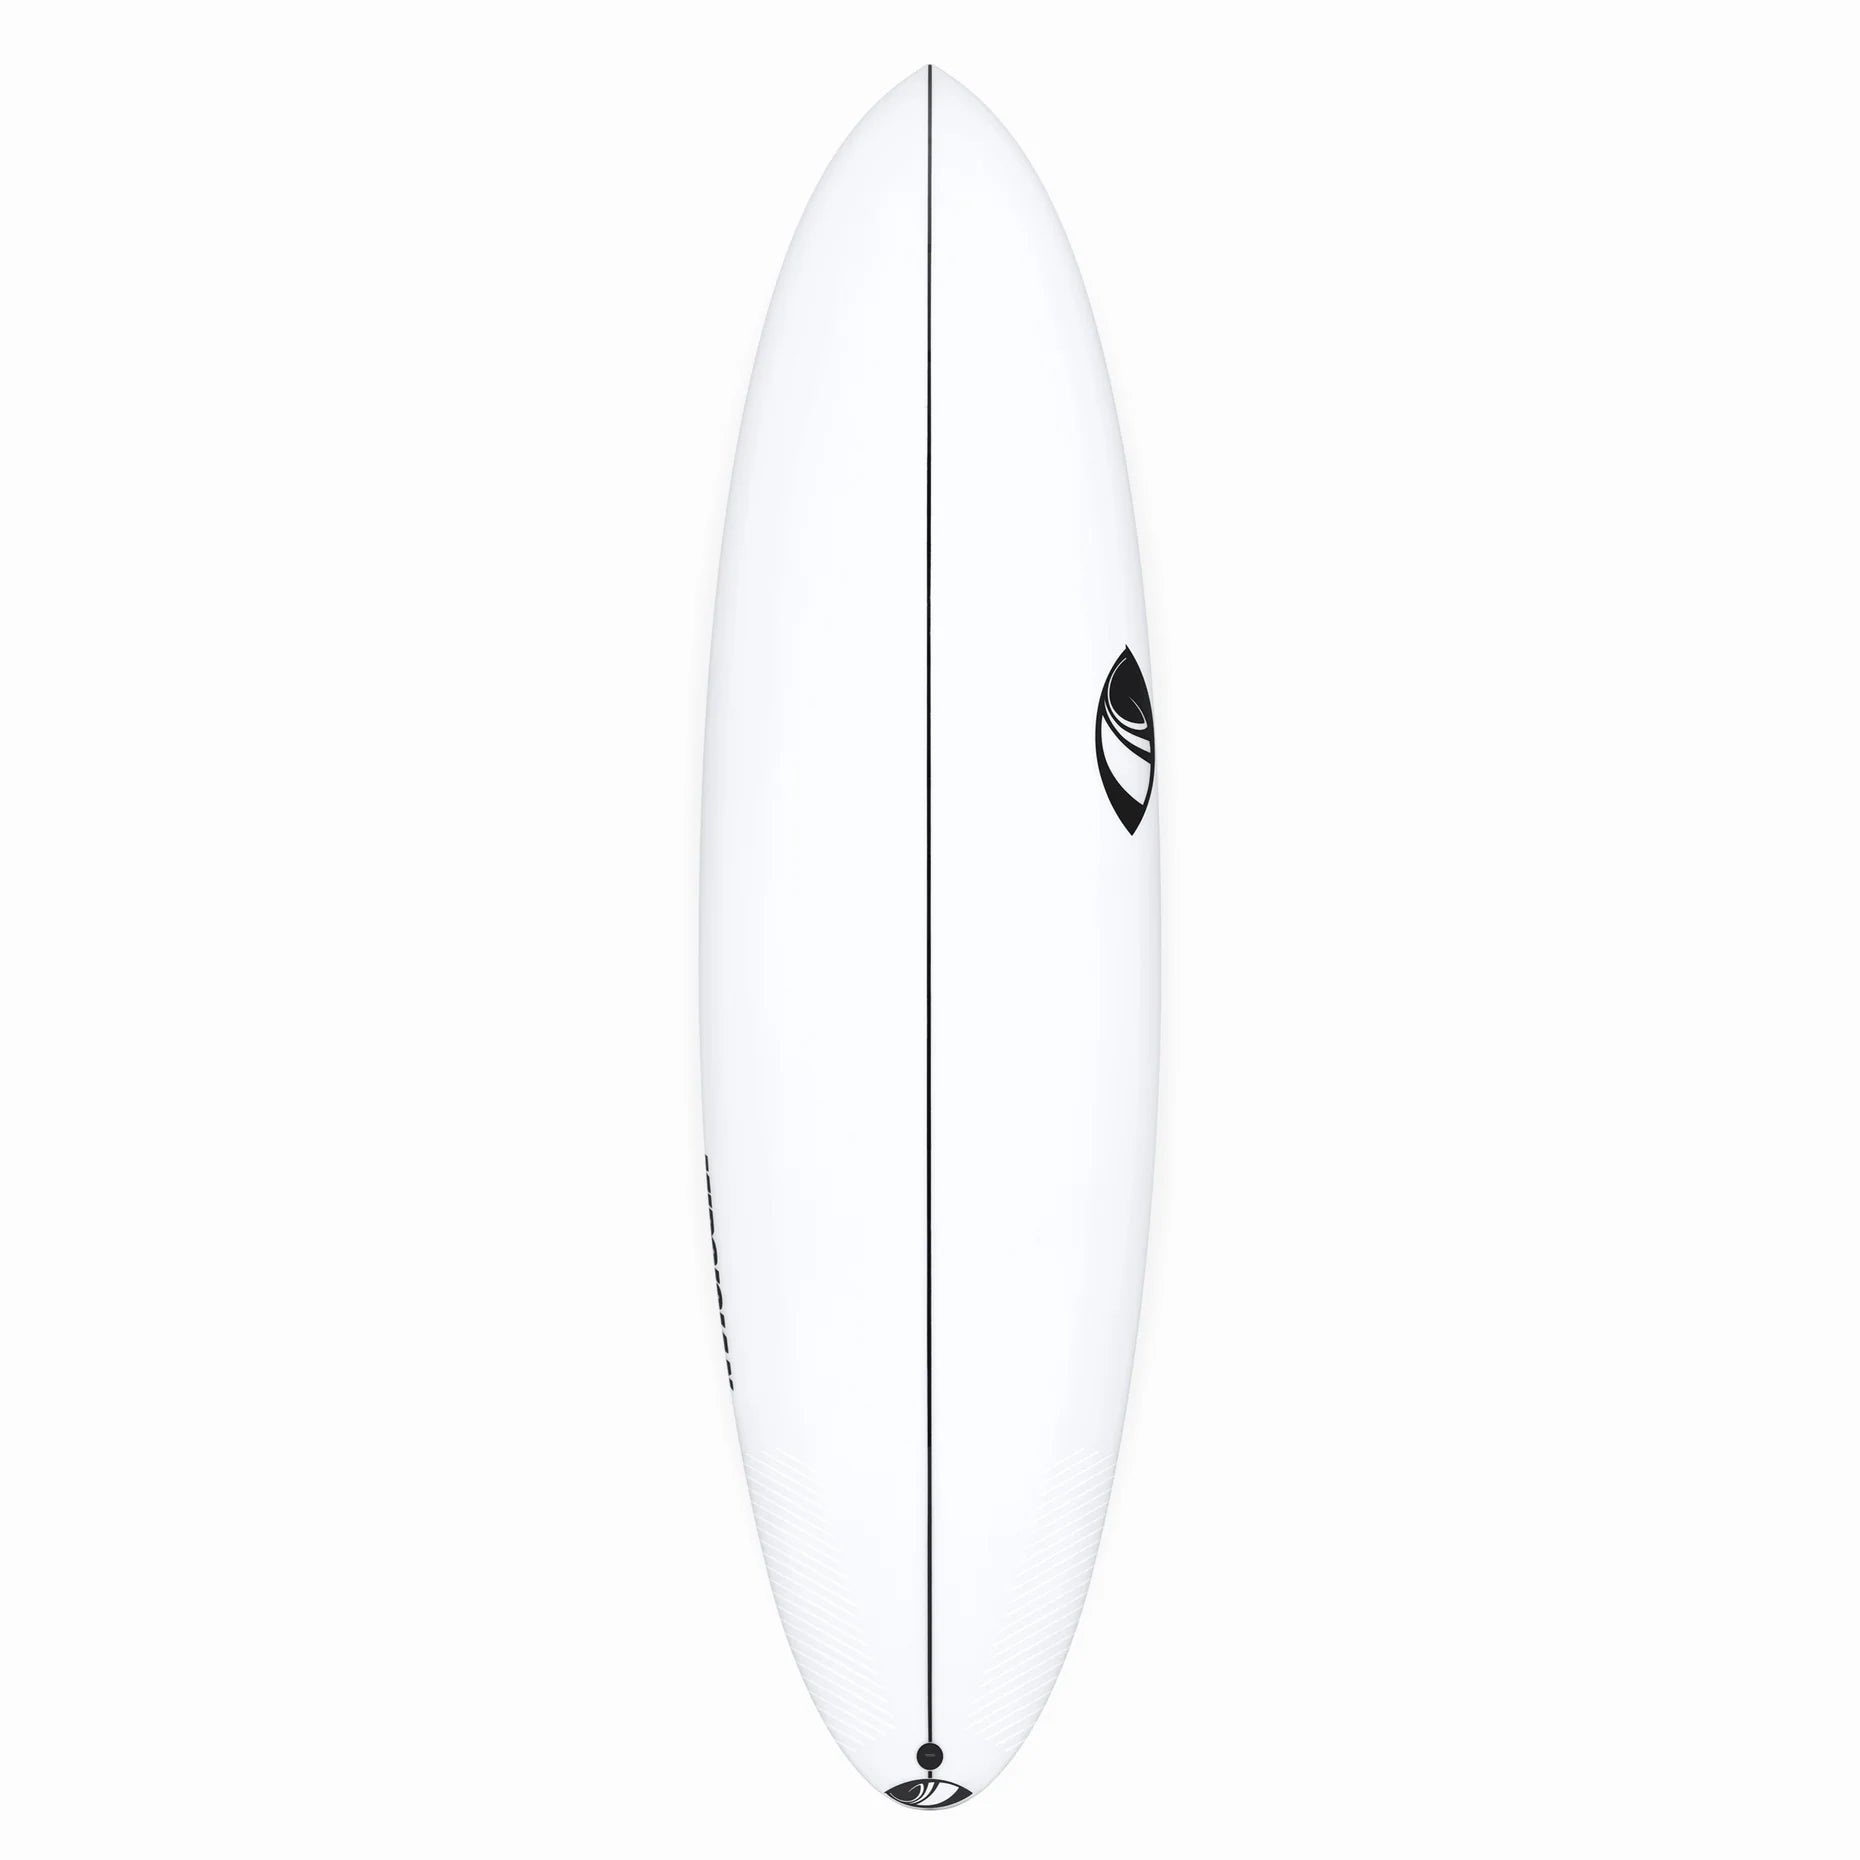 Sharp Eye Midgician Midlength - Color Surfboards SHARP EYE 